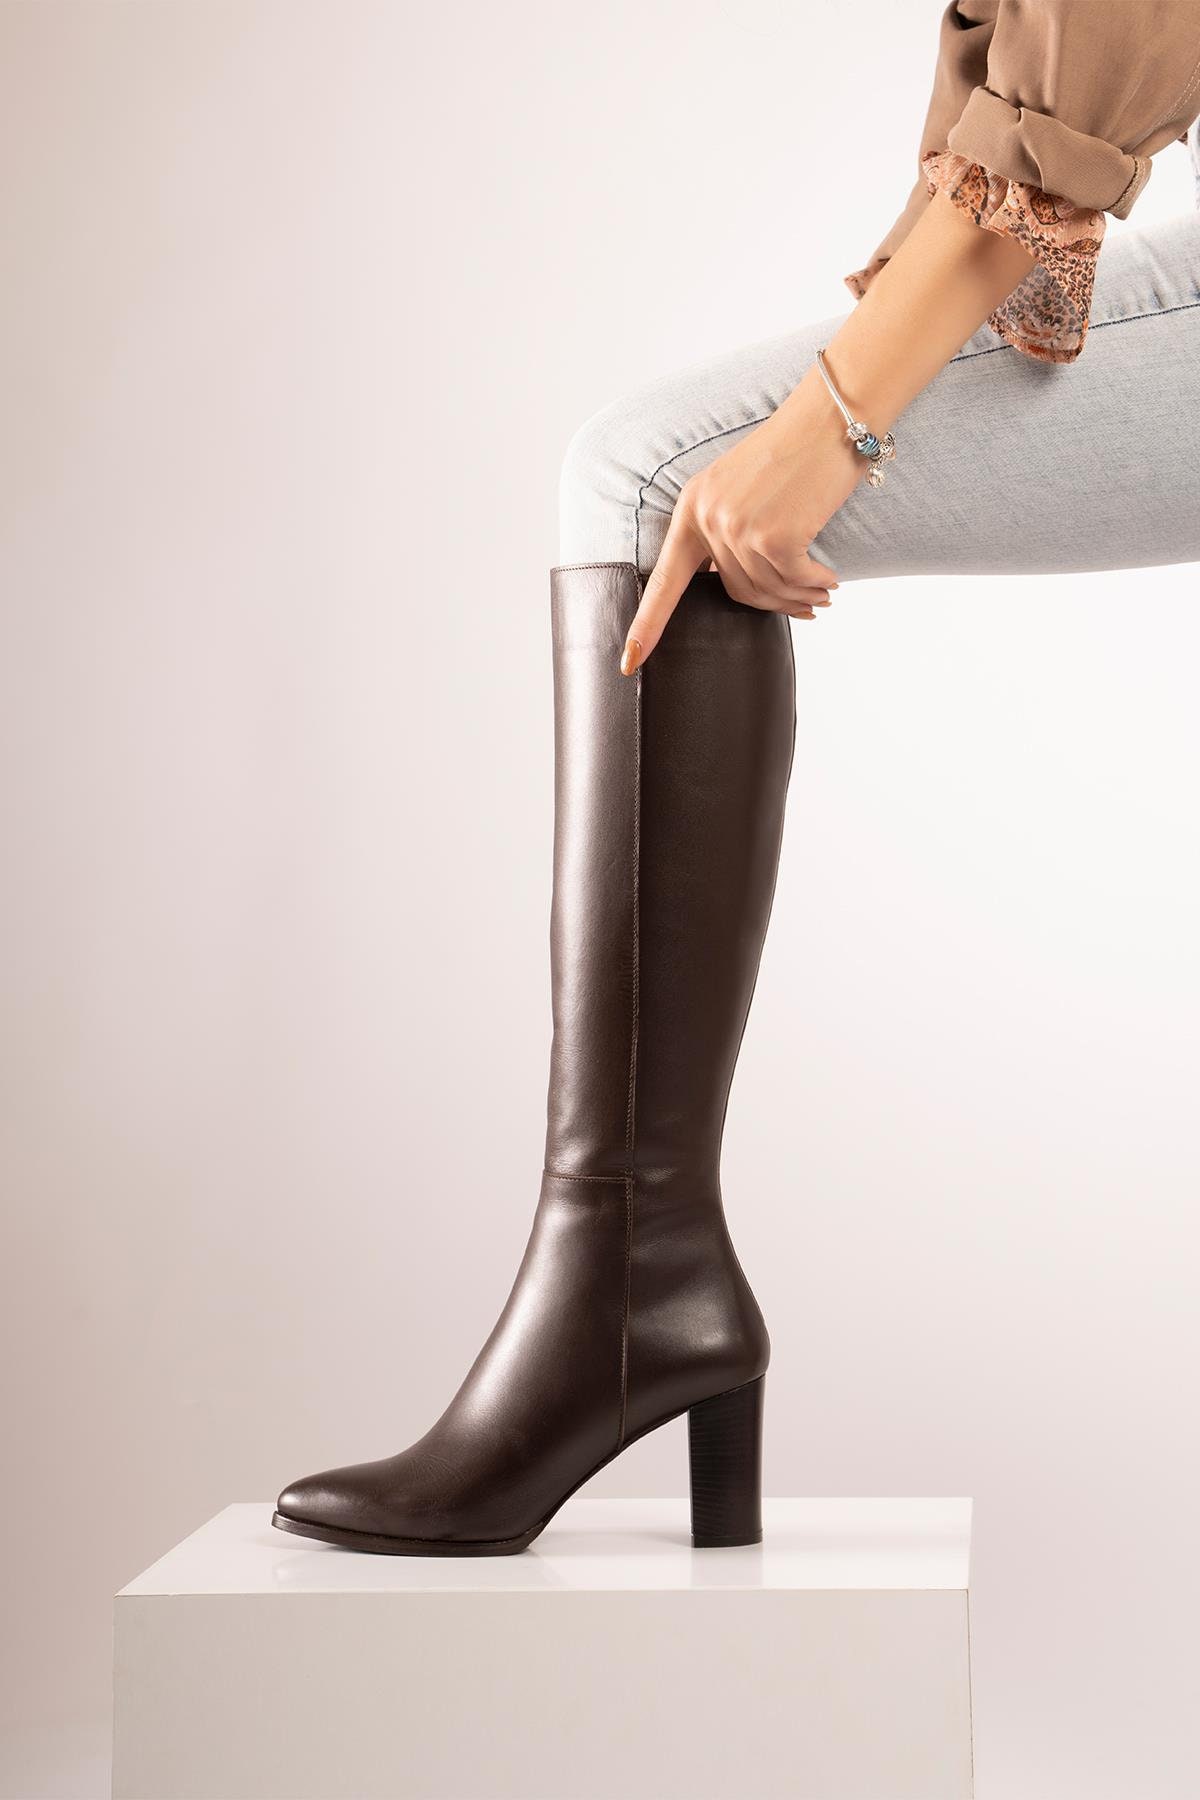 narrow skinny calf boots